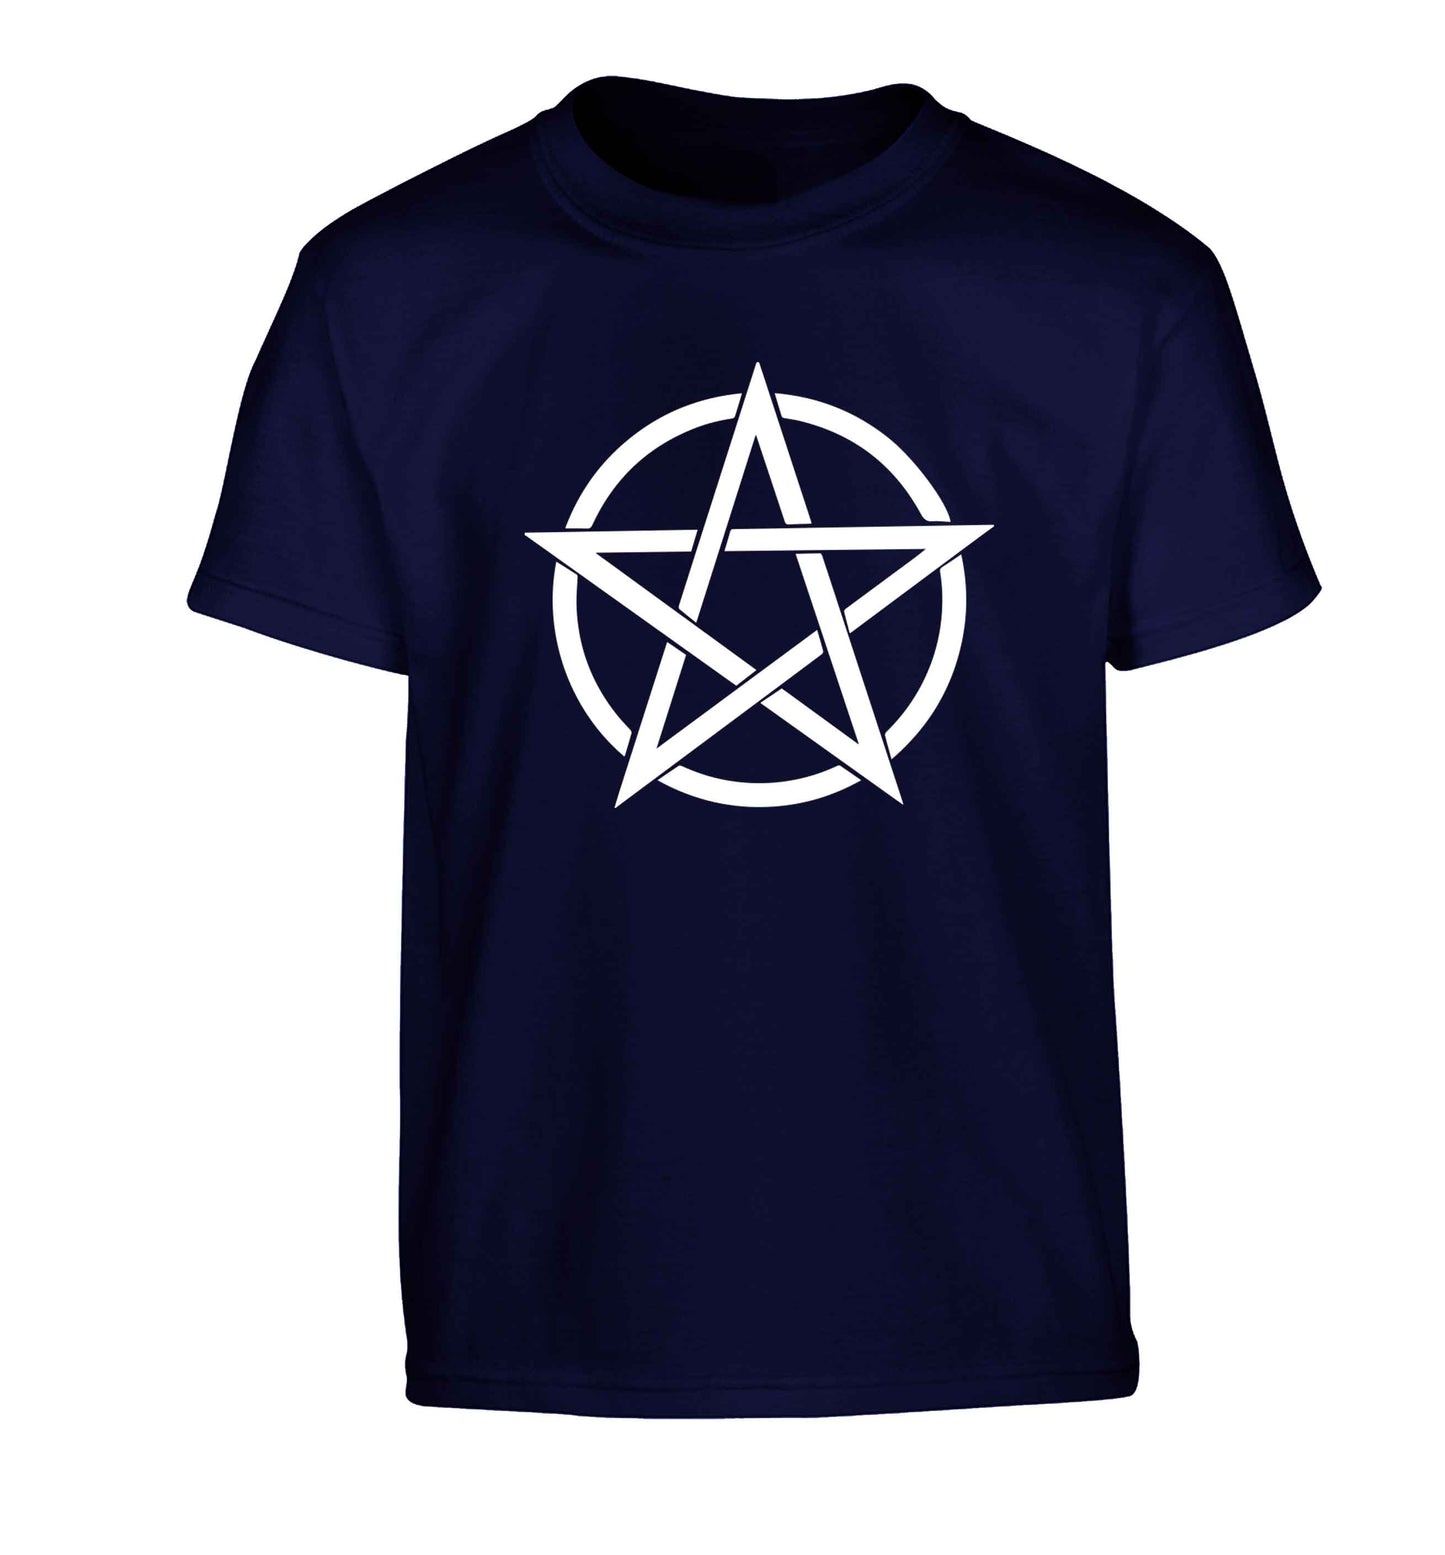 Pentagram symbol Children's navy Tshirt 12-13 Years